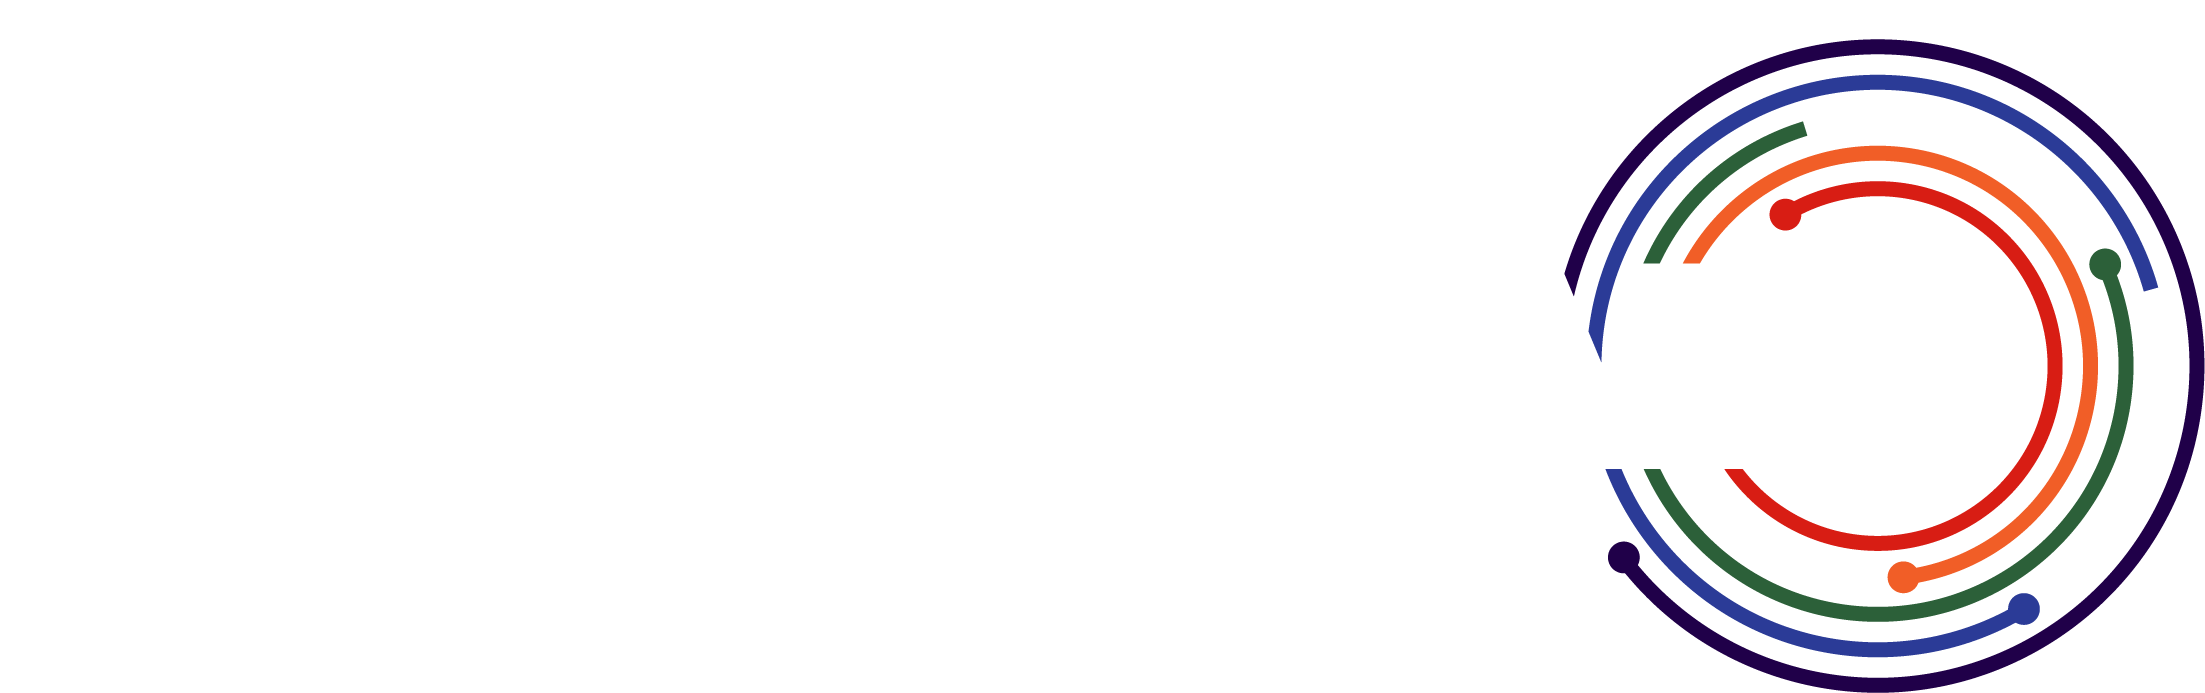 2021-summit-logo